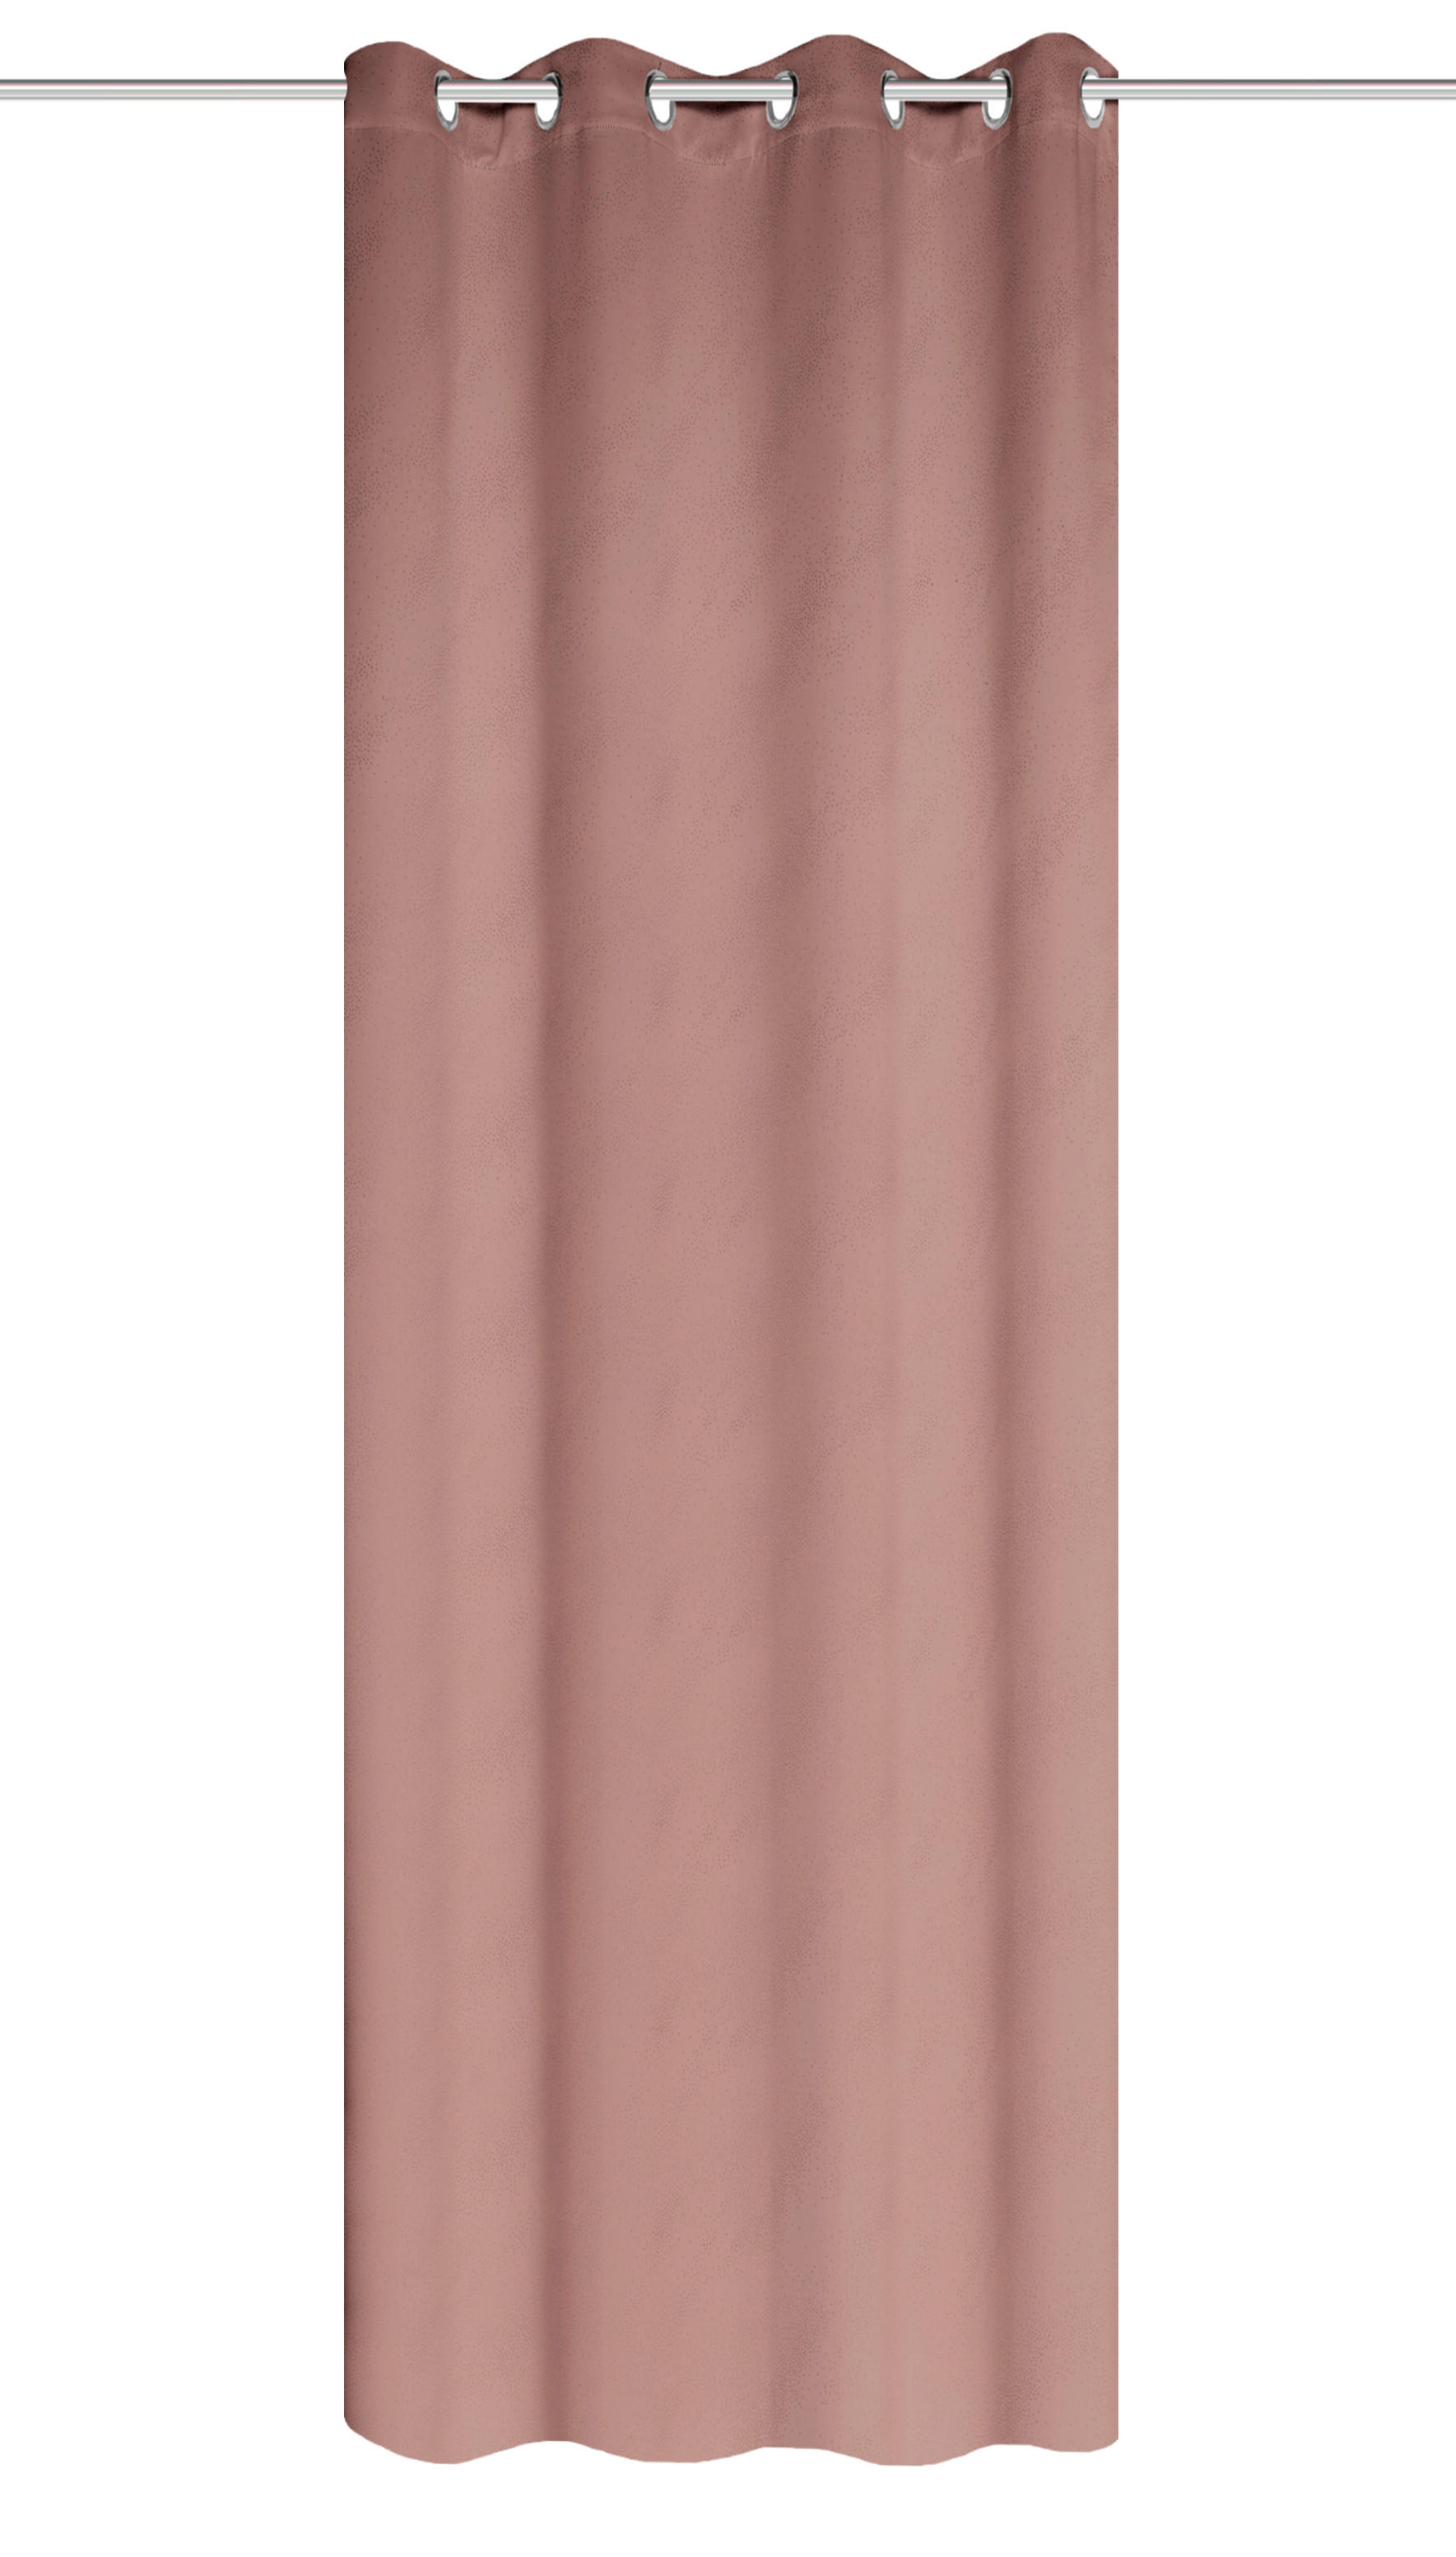 ÖSENSCHAL GALAXY blickdicht 135/245 cm   - Altrosa, Basics, Textil (135/245cm)